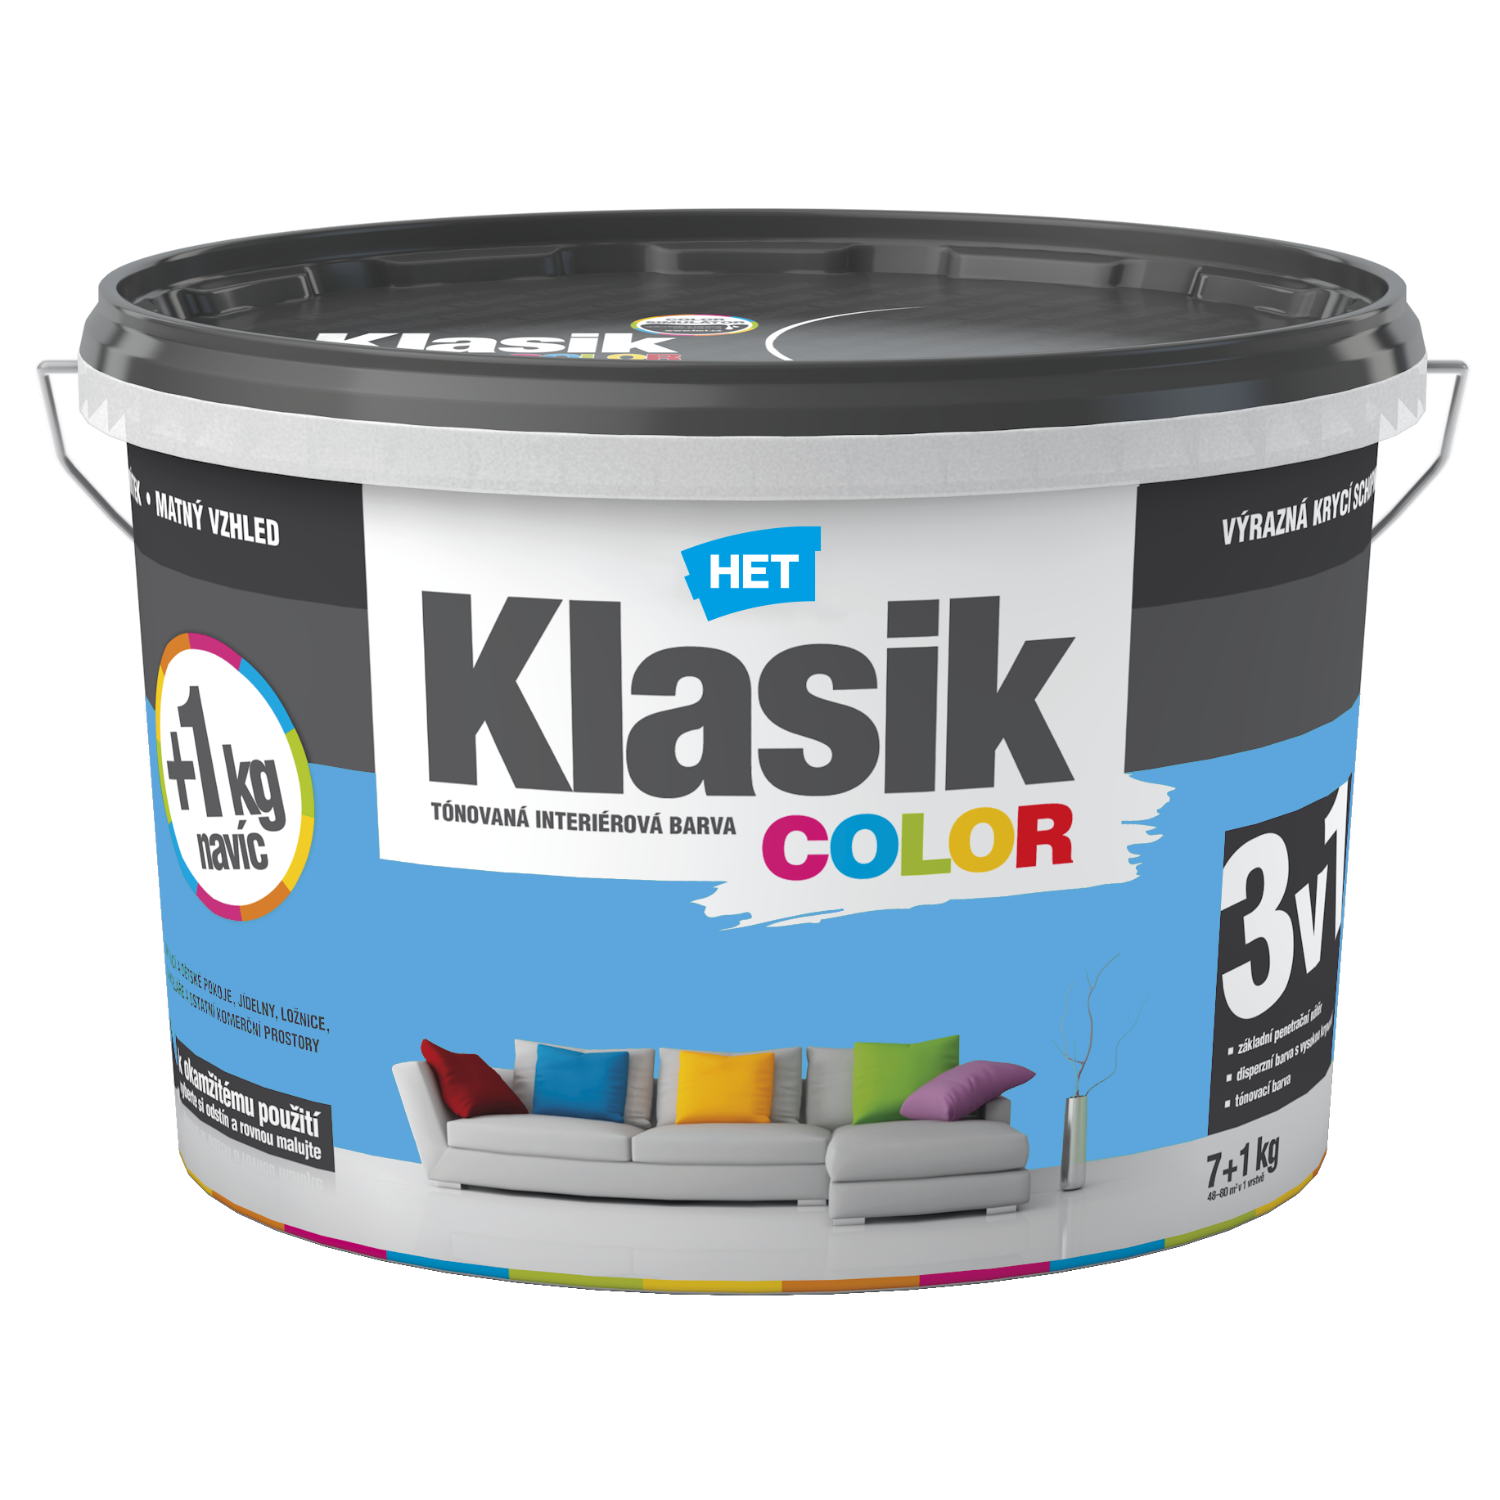 HET Klasik COLOR tónovaná interiérová akrylátová disperzná oteruvzdorná farba 7 kg + 1 kg zdarma, KC0417 - modrý azúrový